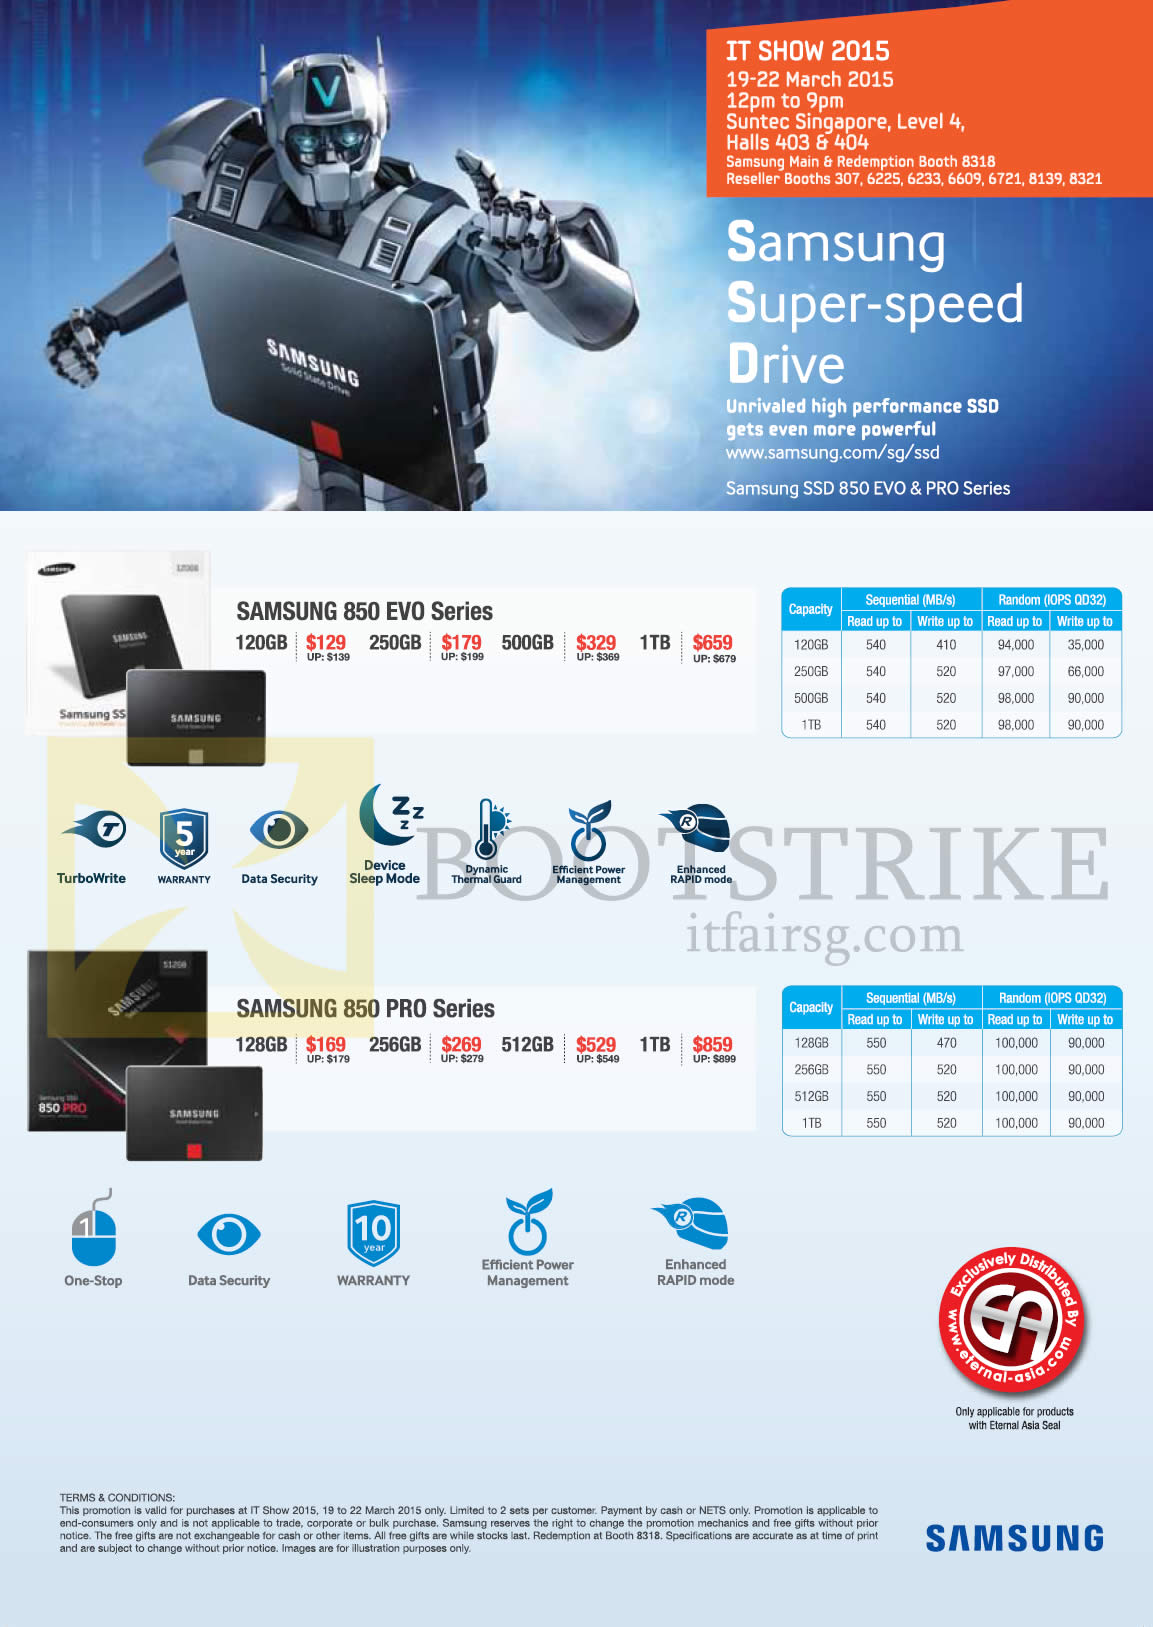 IT SHOW 2015 price list image brochure of Samsung SSD 850 Evo Series, 850 Pro Series